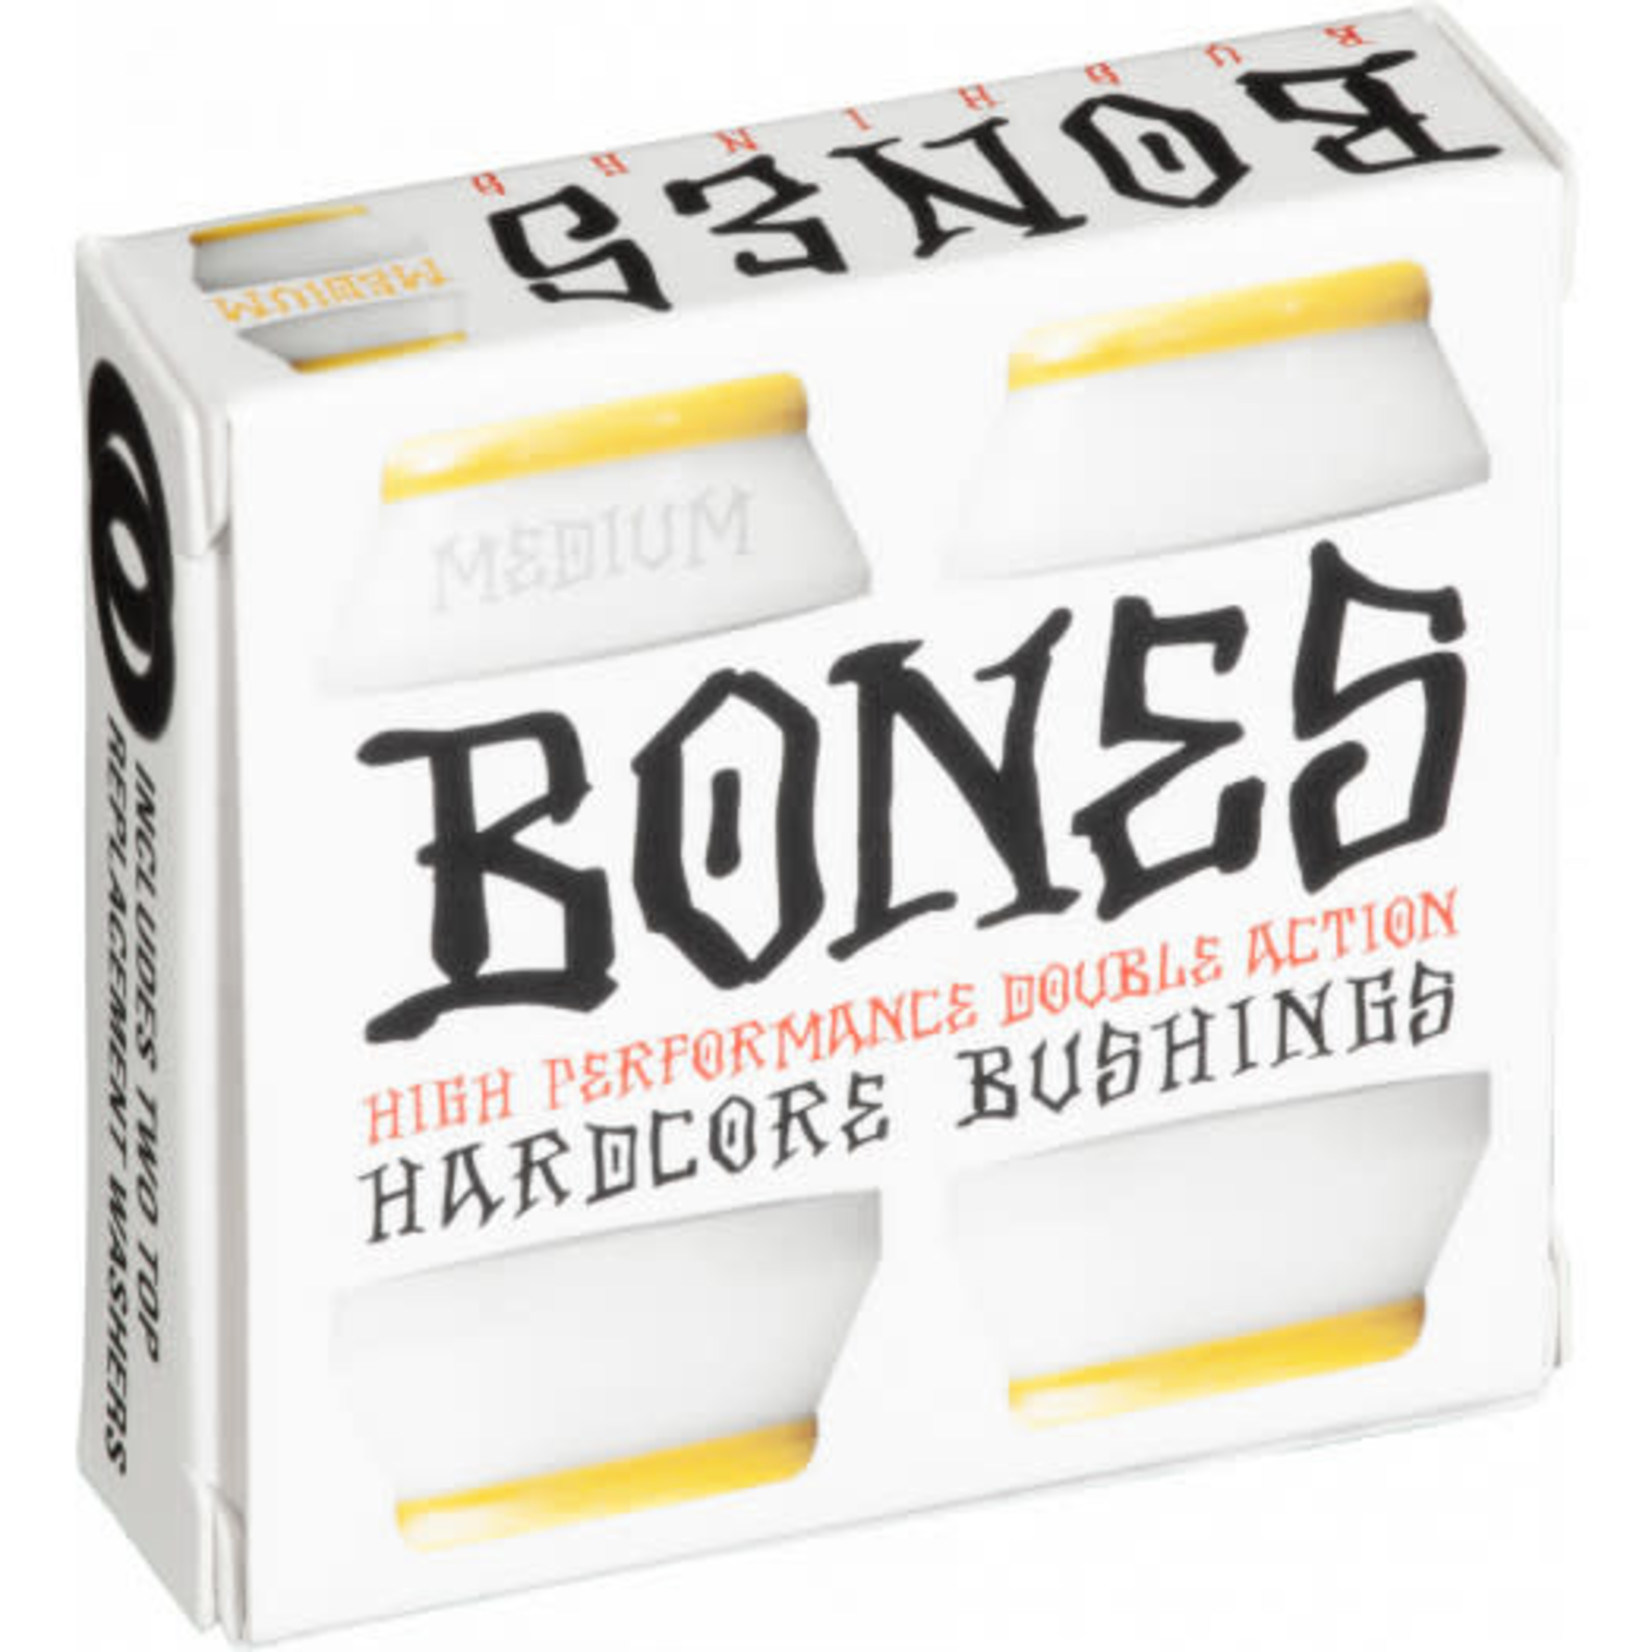 Bones Bones Hardcore 4PC Med White/Yellow Bushing Kit